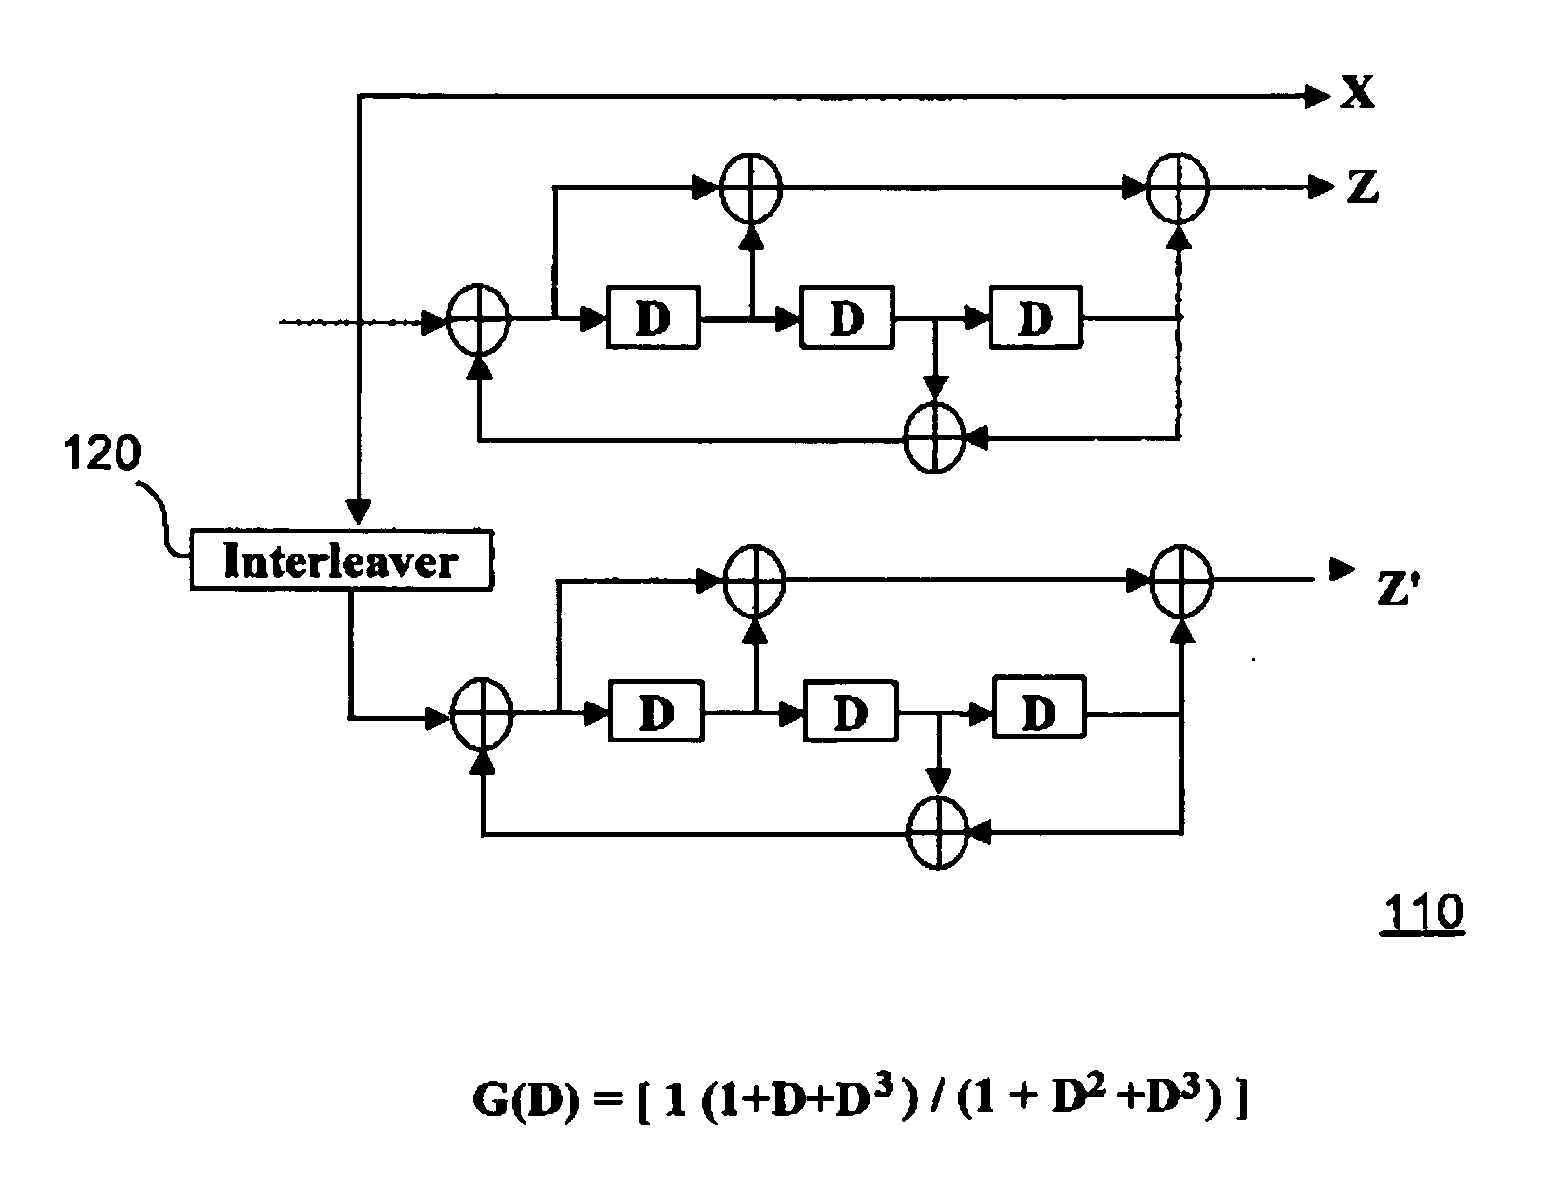 System and method for forward and backward recursive computation